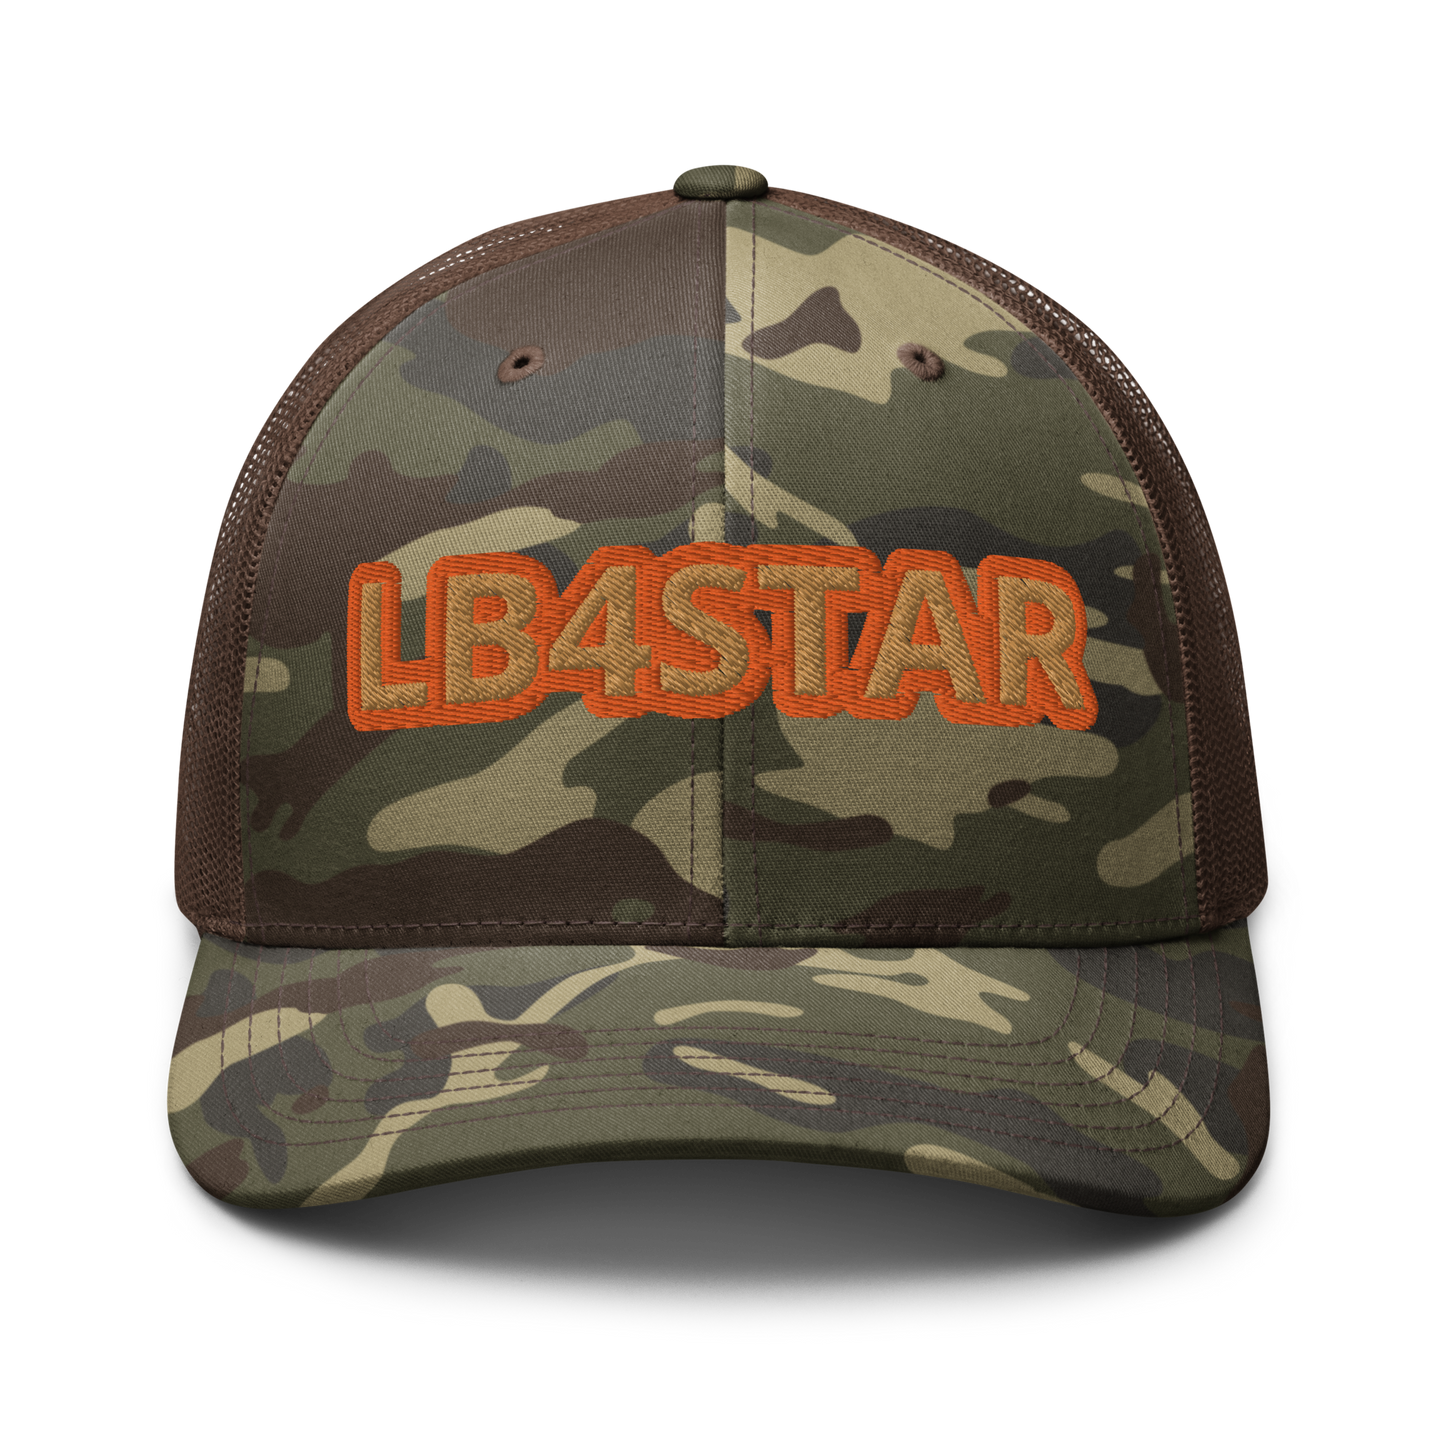 Camouflage trucker hat LB4ASTAR